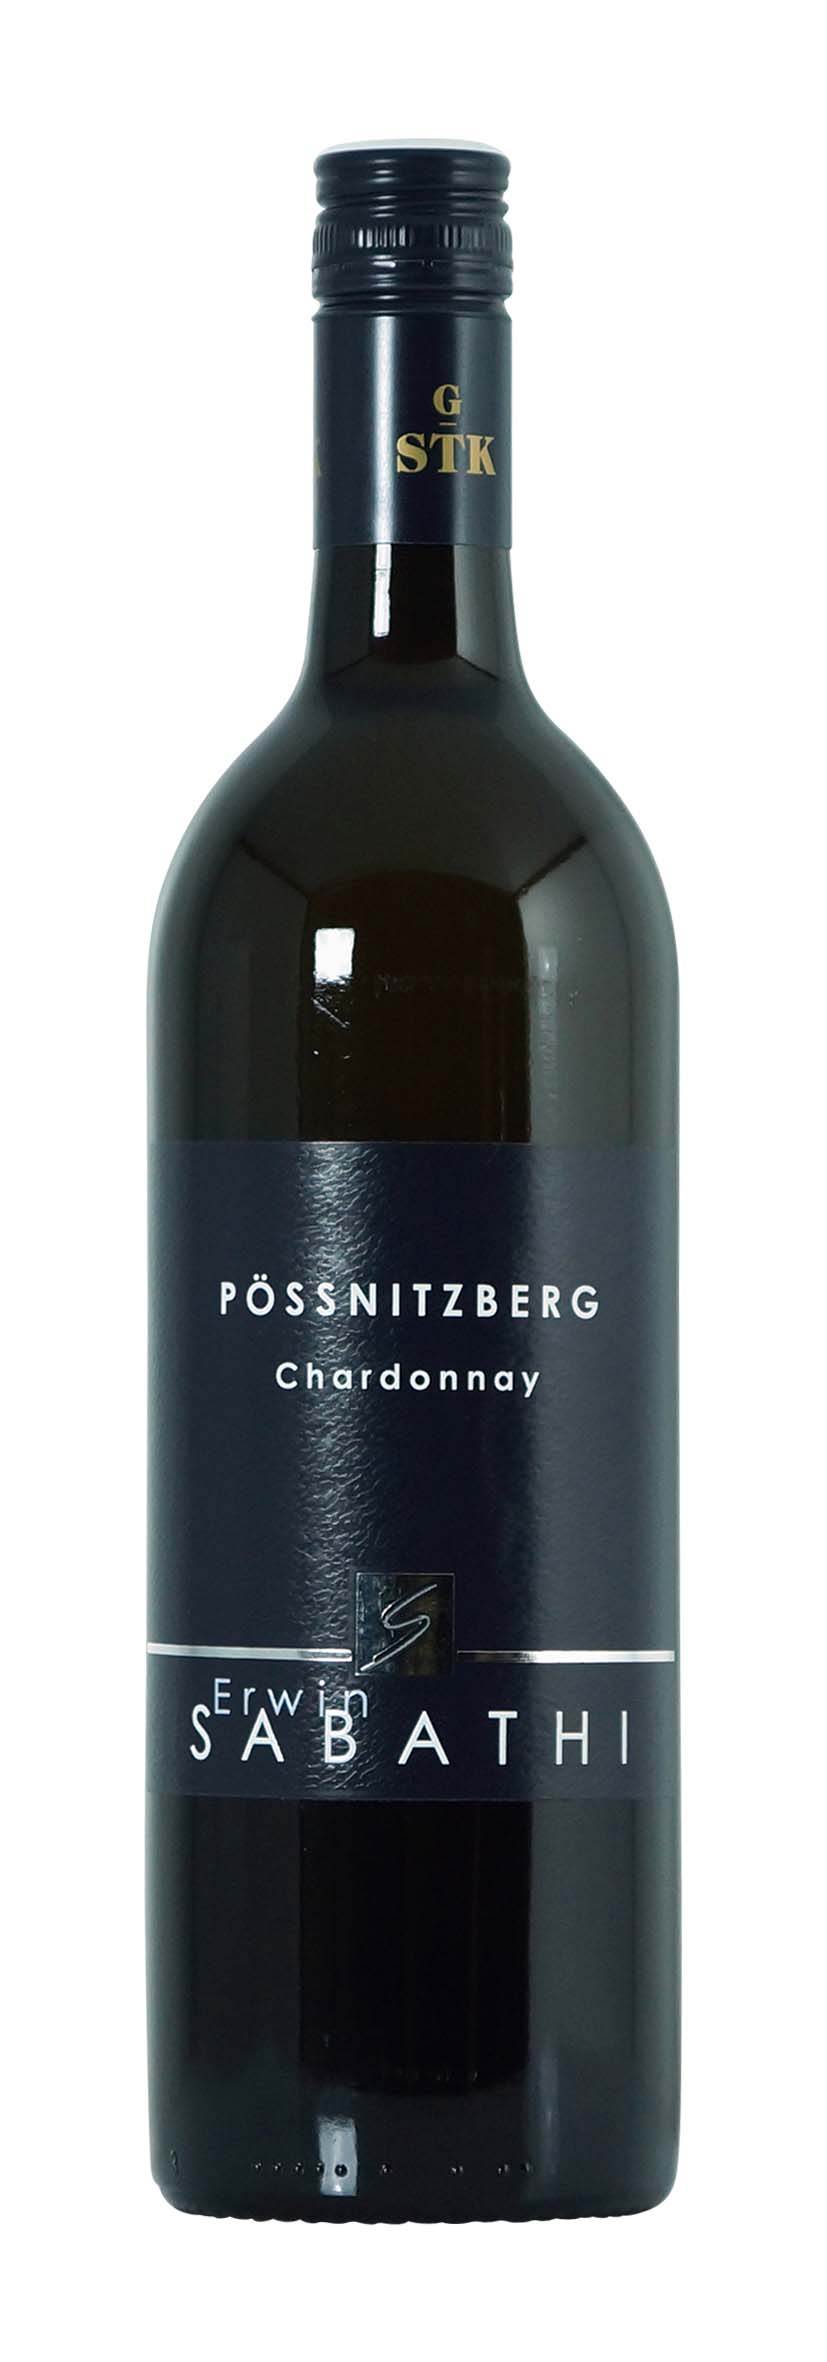 Pössnitzberg Chardonnay Grosse STK Lage 2013